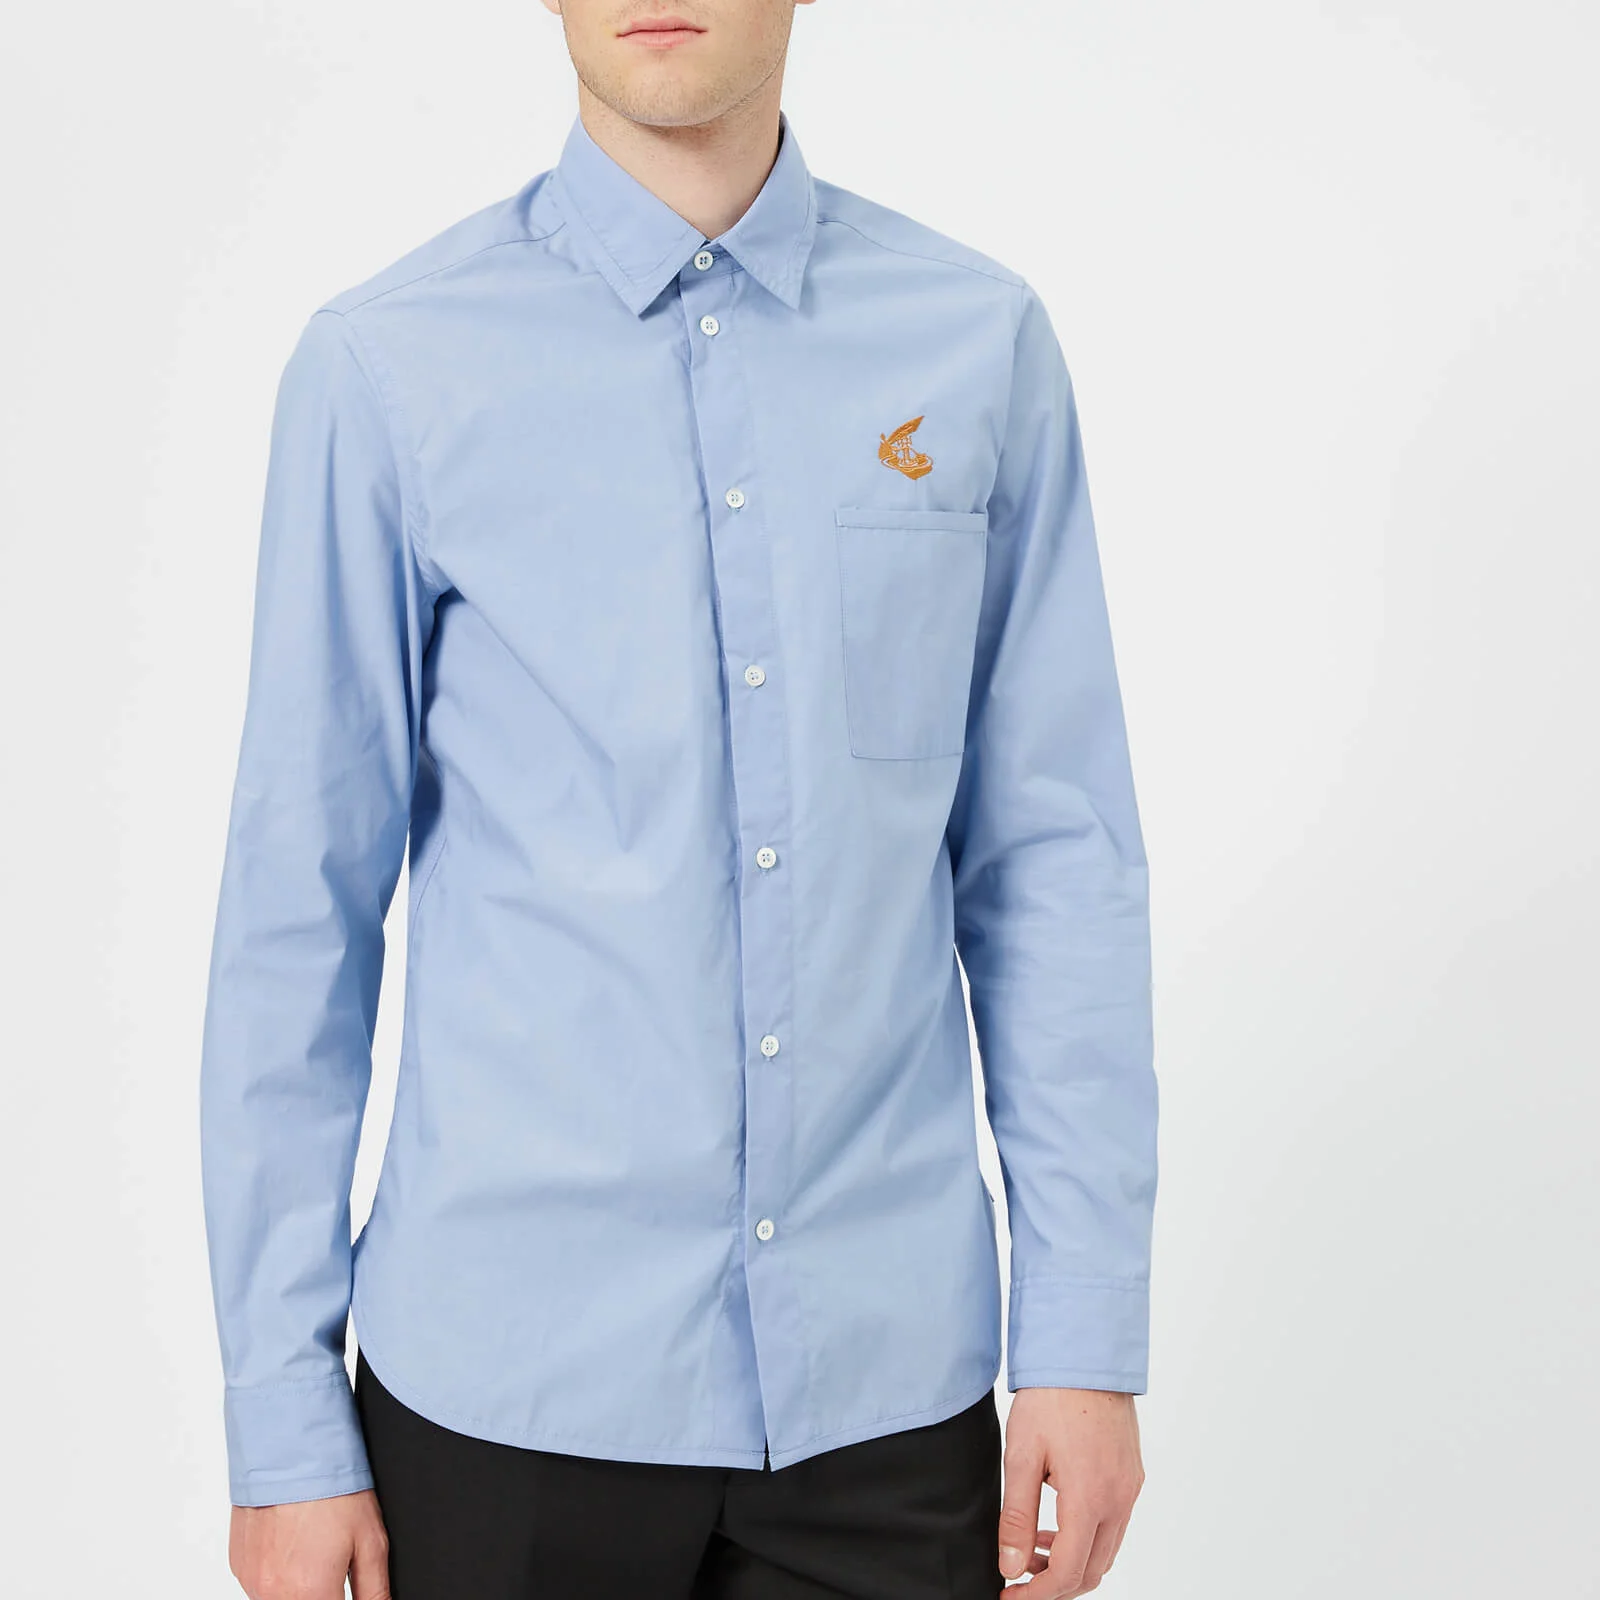 Vivienne Westwood Anglomania Men's Classic Shirt - Blue Image 1